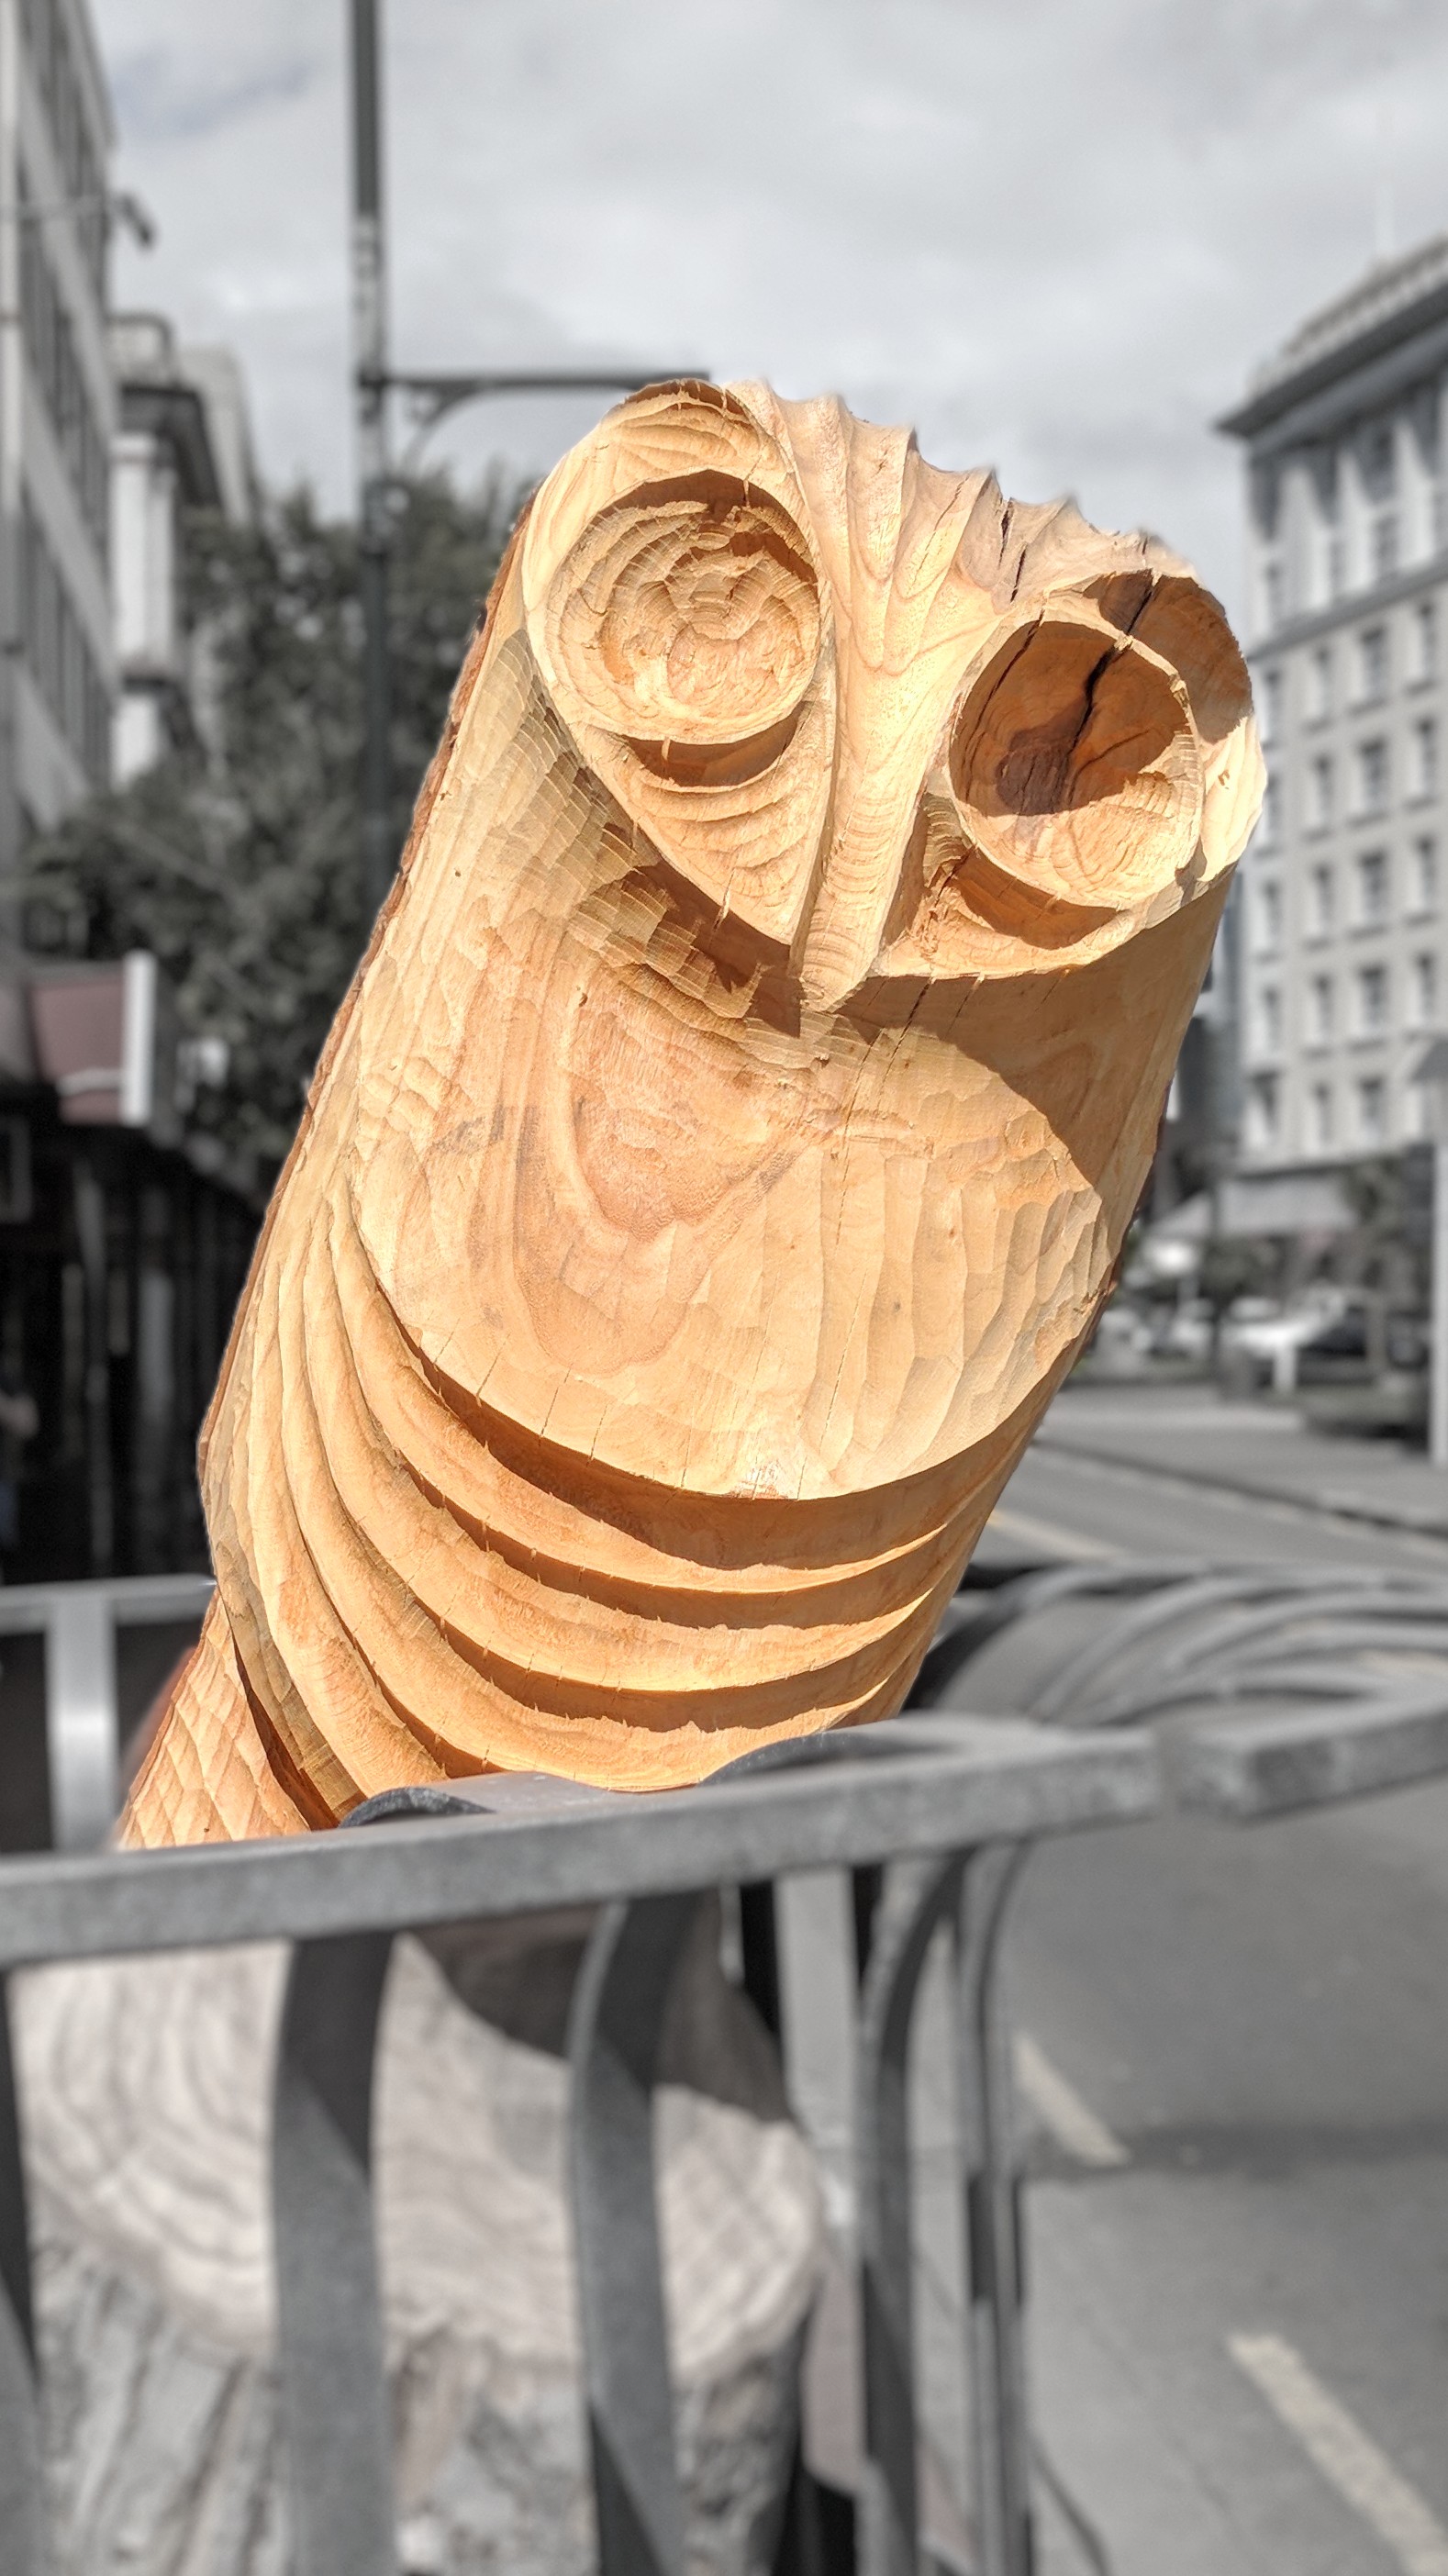 Wooden Owl sculpture in a city bin